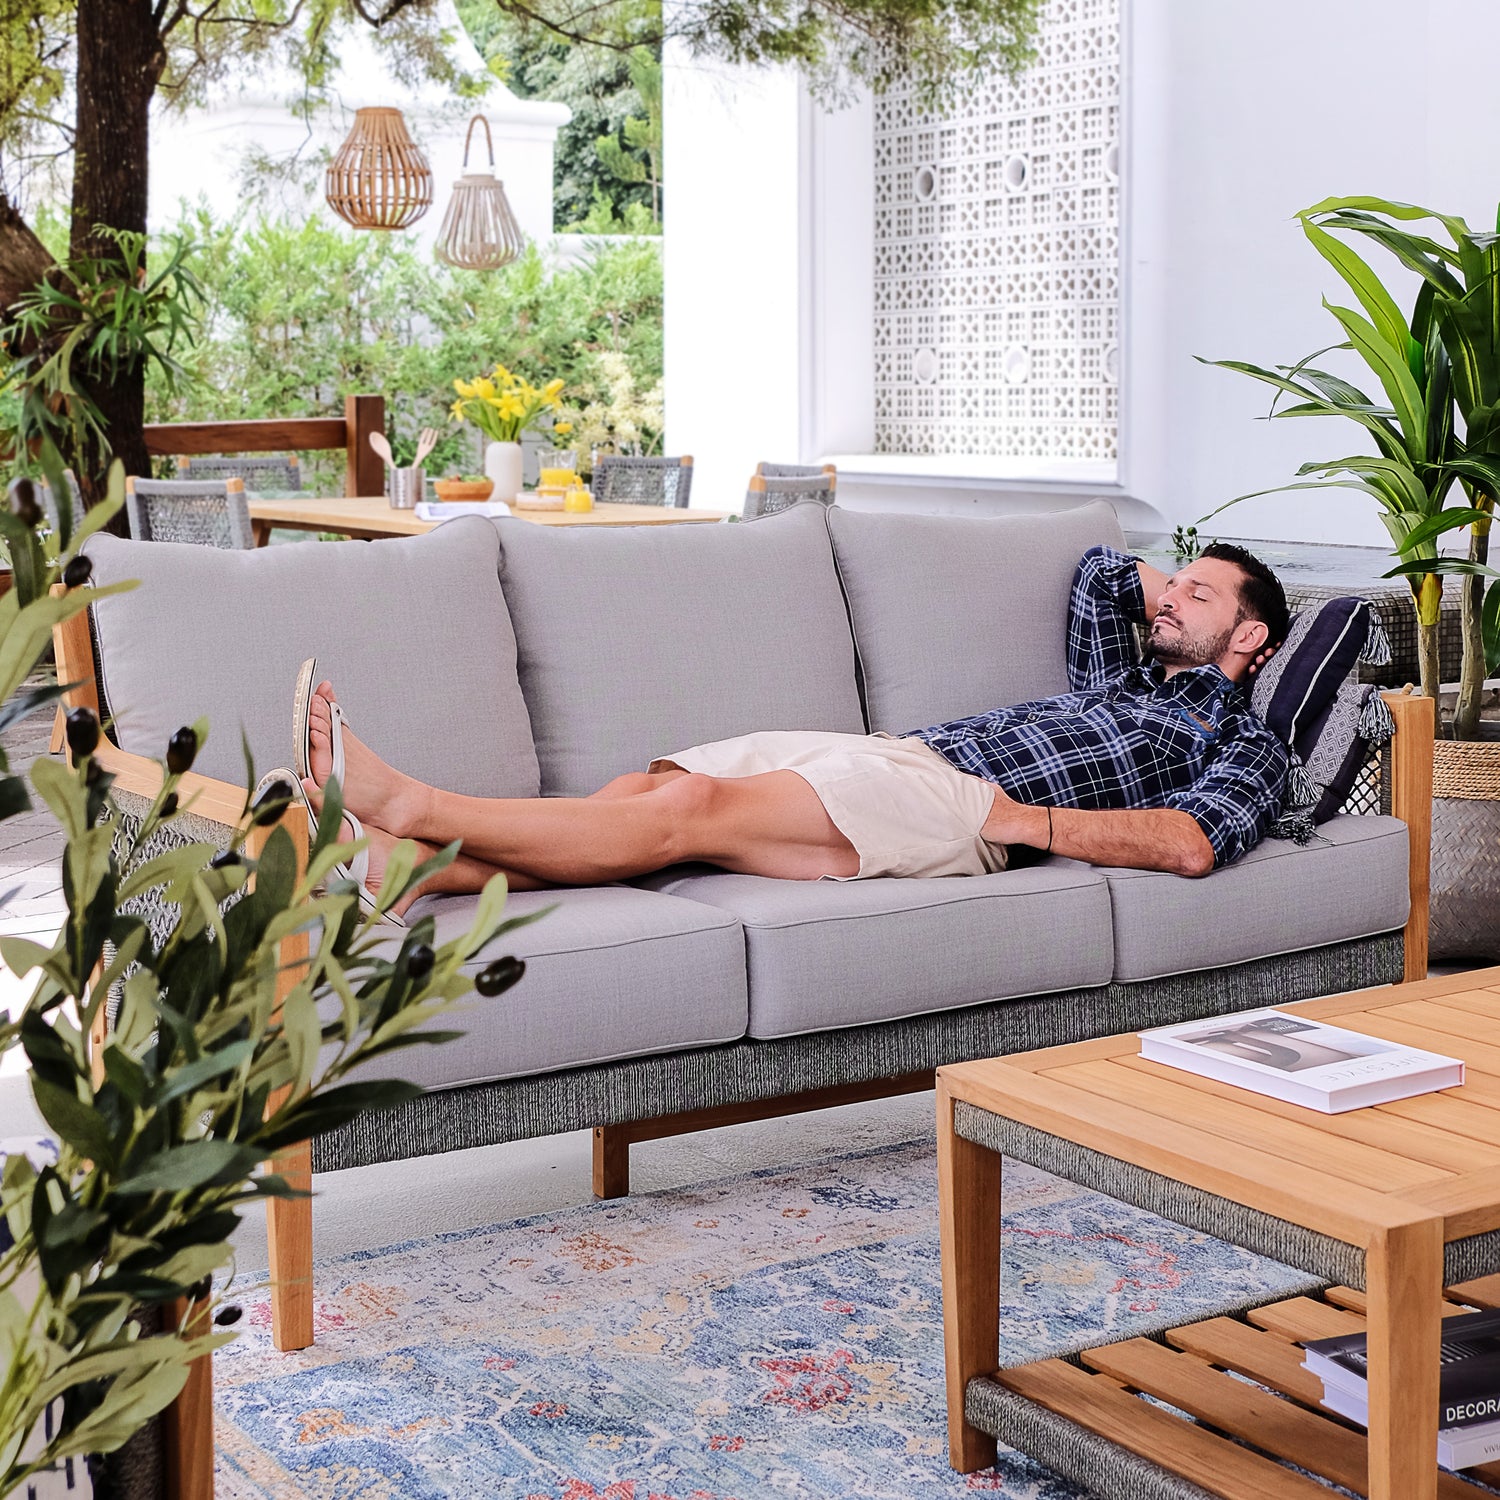 Nassau Teak Wood Patio Sofa with Gray Cushion